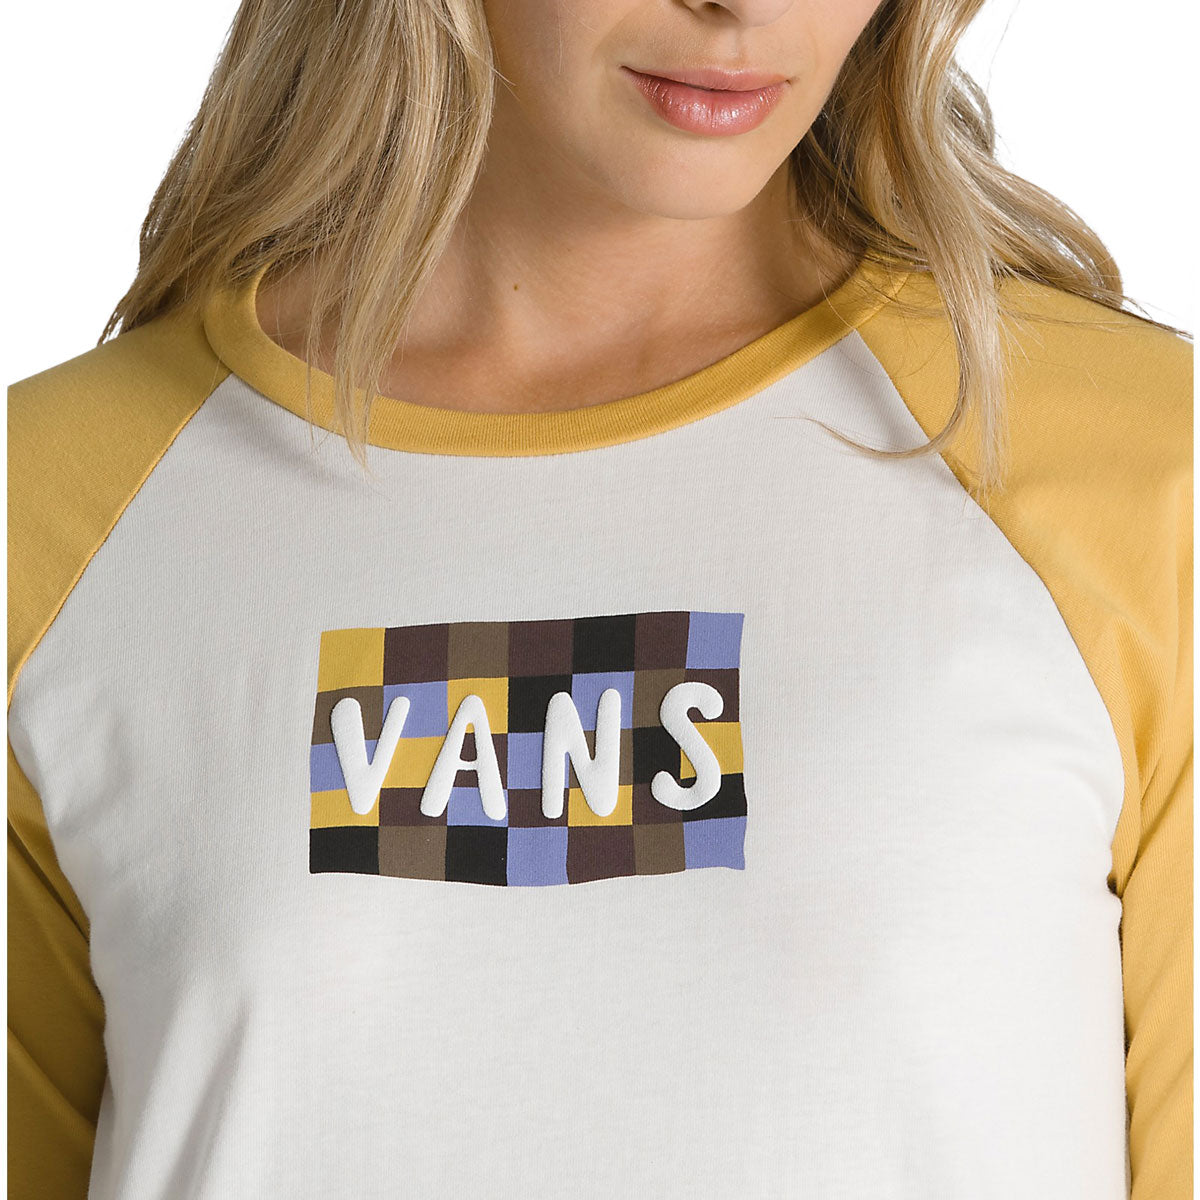 Vans Womens Lizzie Everyday Raglan Shirt - Marshmallow/Ochre image 3